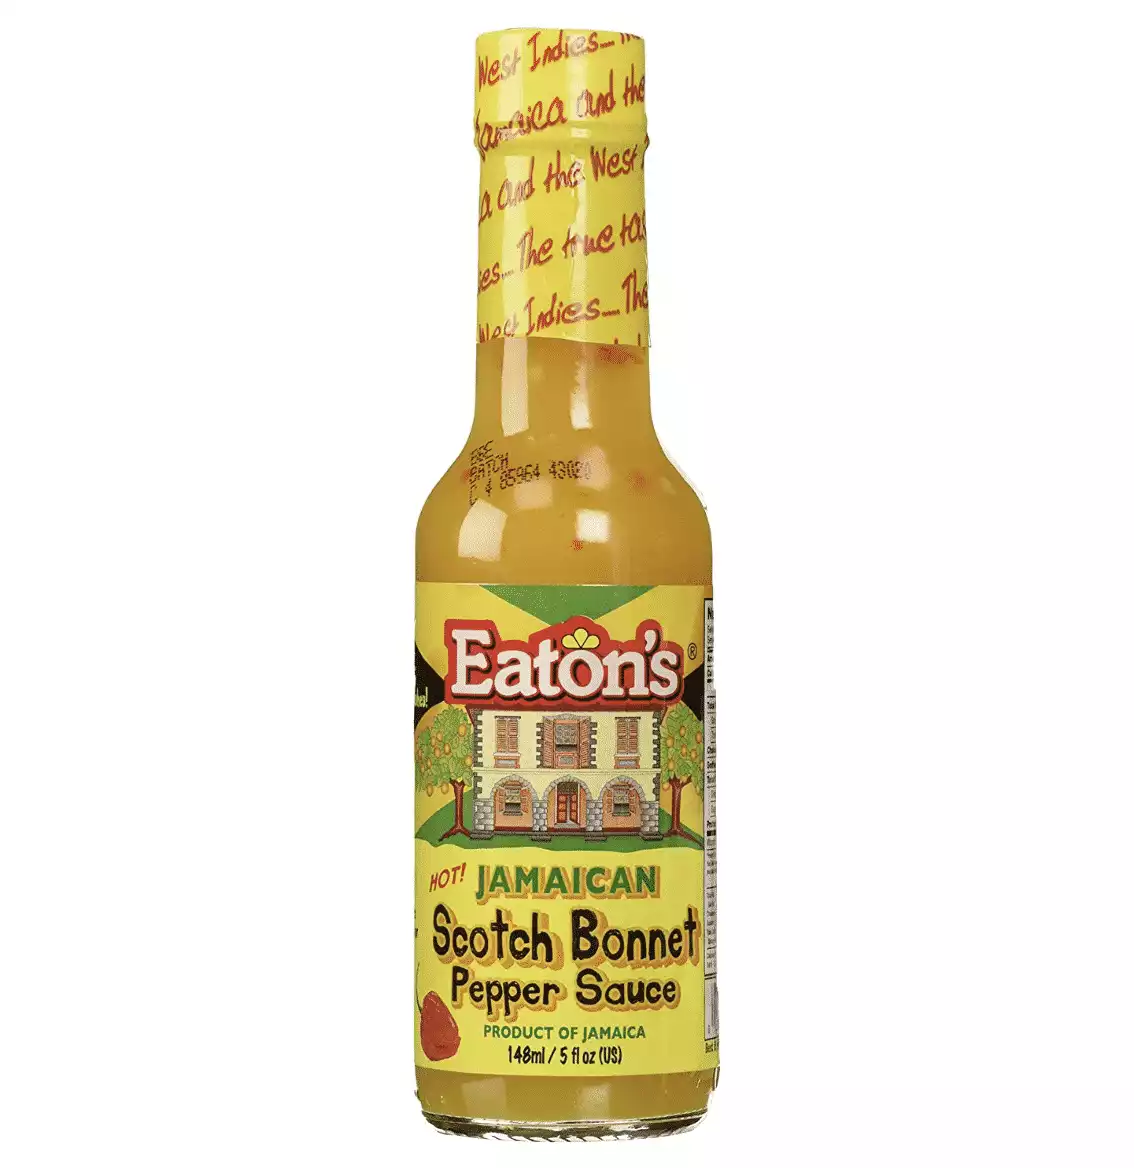 Eaton's Jamaican Scotch Bonnet Pepper Sauce